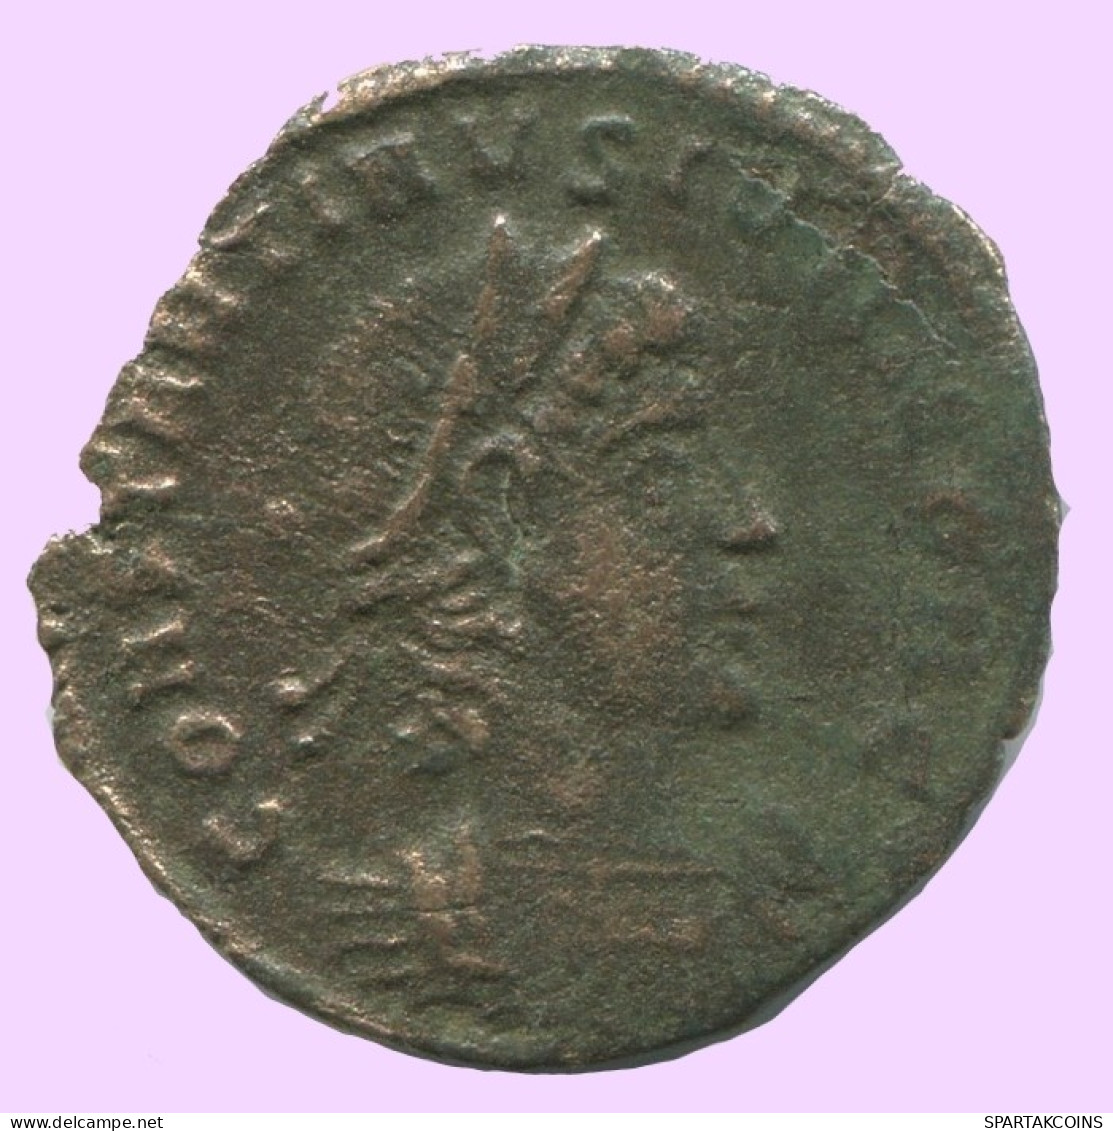 LATE ROMAN EMPIRE Follis Ancient Authentic Roman Coin 0.9g/16mm #ANT2018.7.U.A - La Fin De L'Empire (363-476)